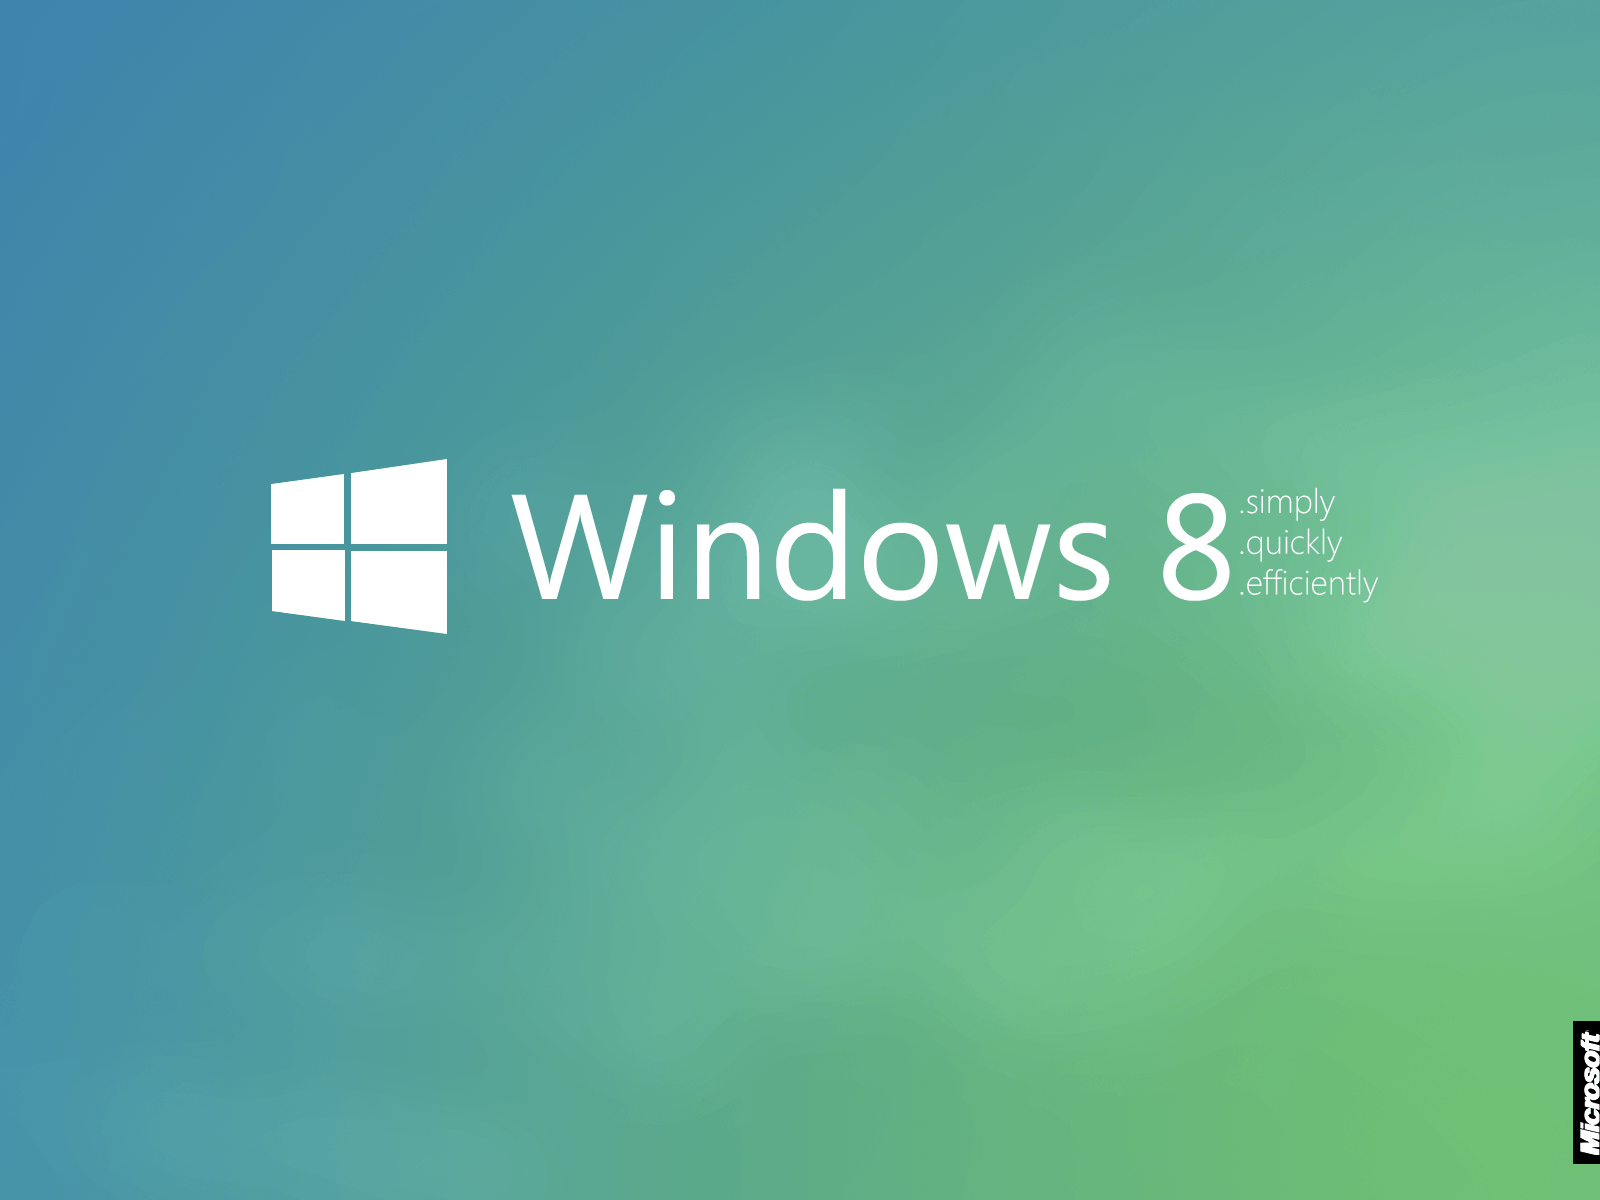 Windows 8 Logo Wallpaper